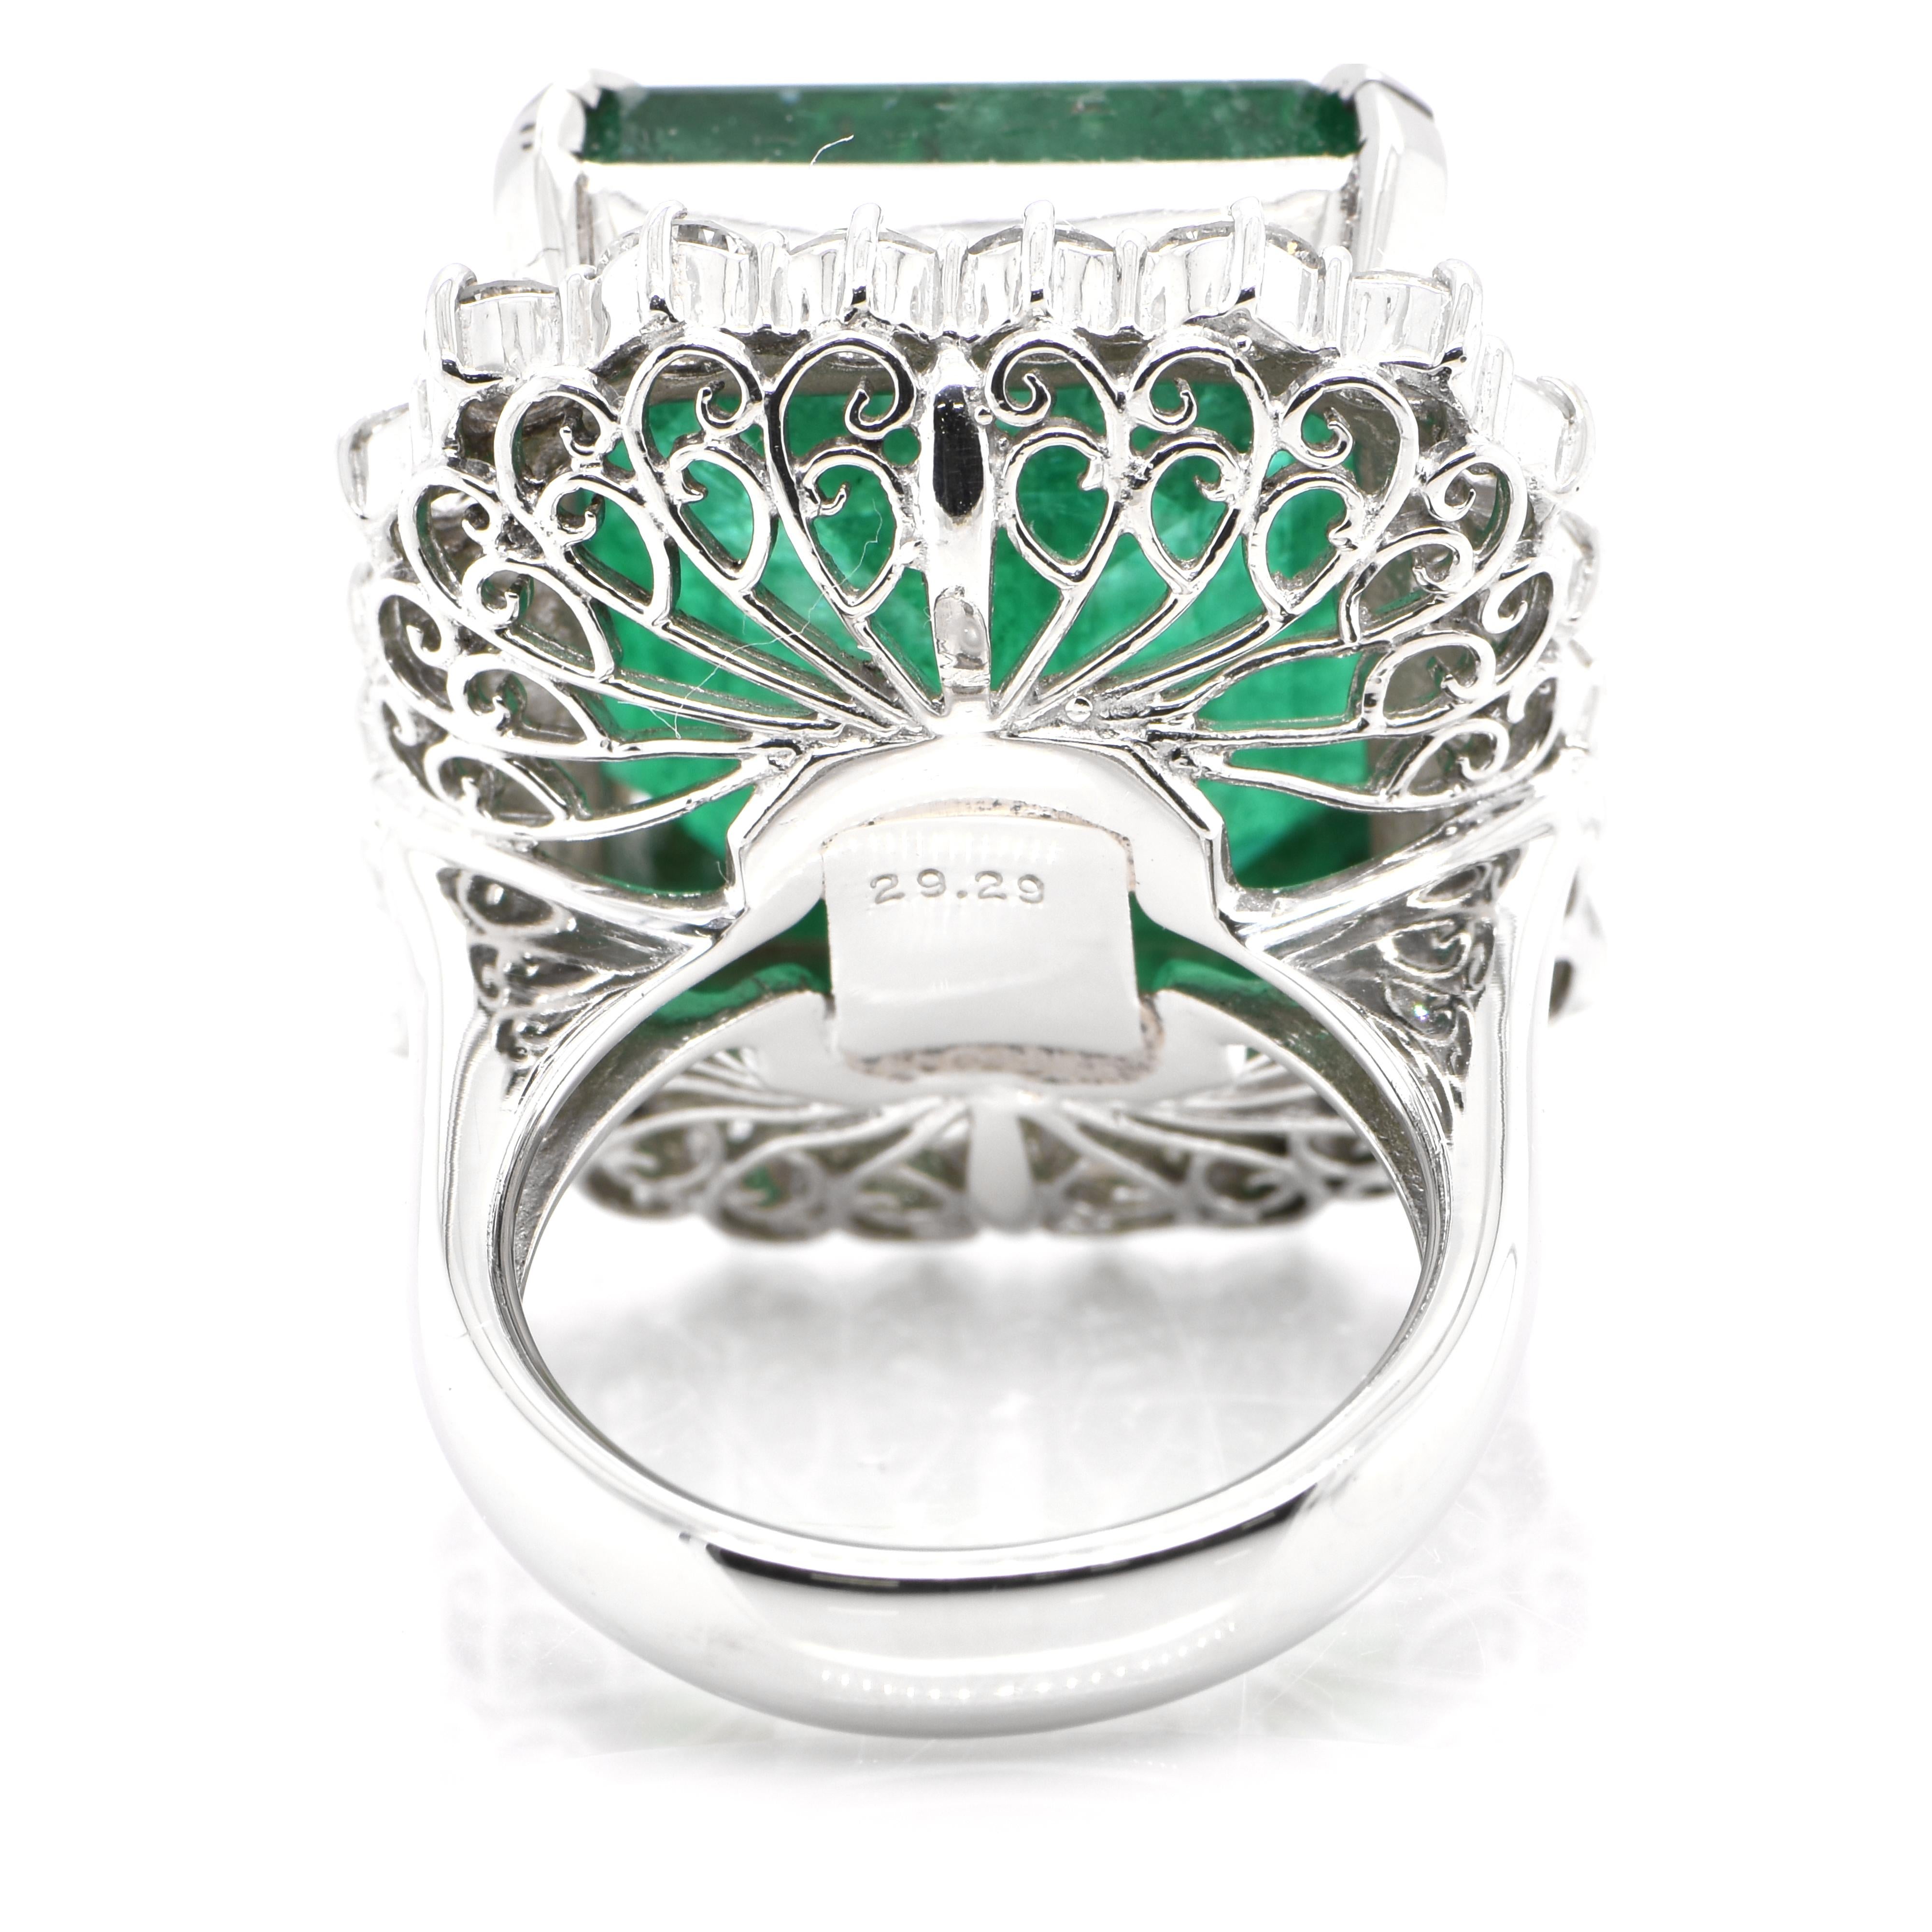 Women's 29.29 Carat Natural Emerald and Diamond Cocktail Ring Set in Platinum